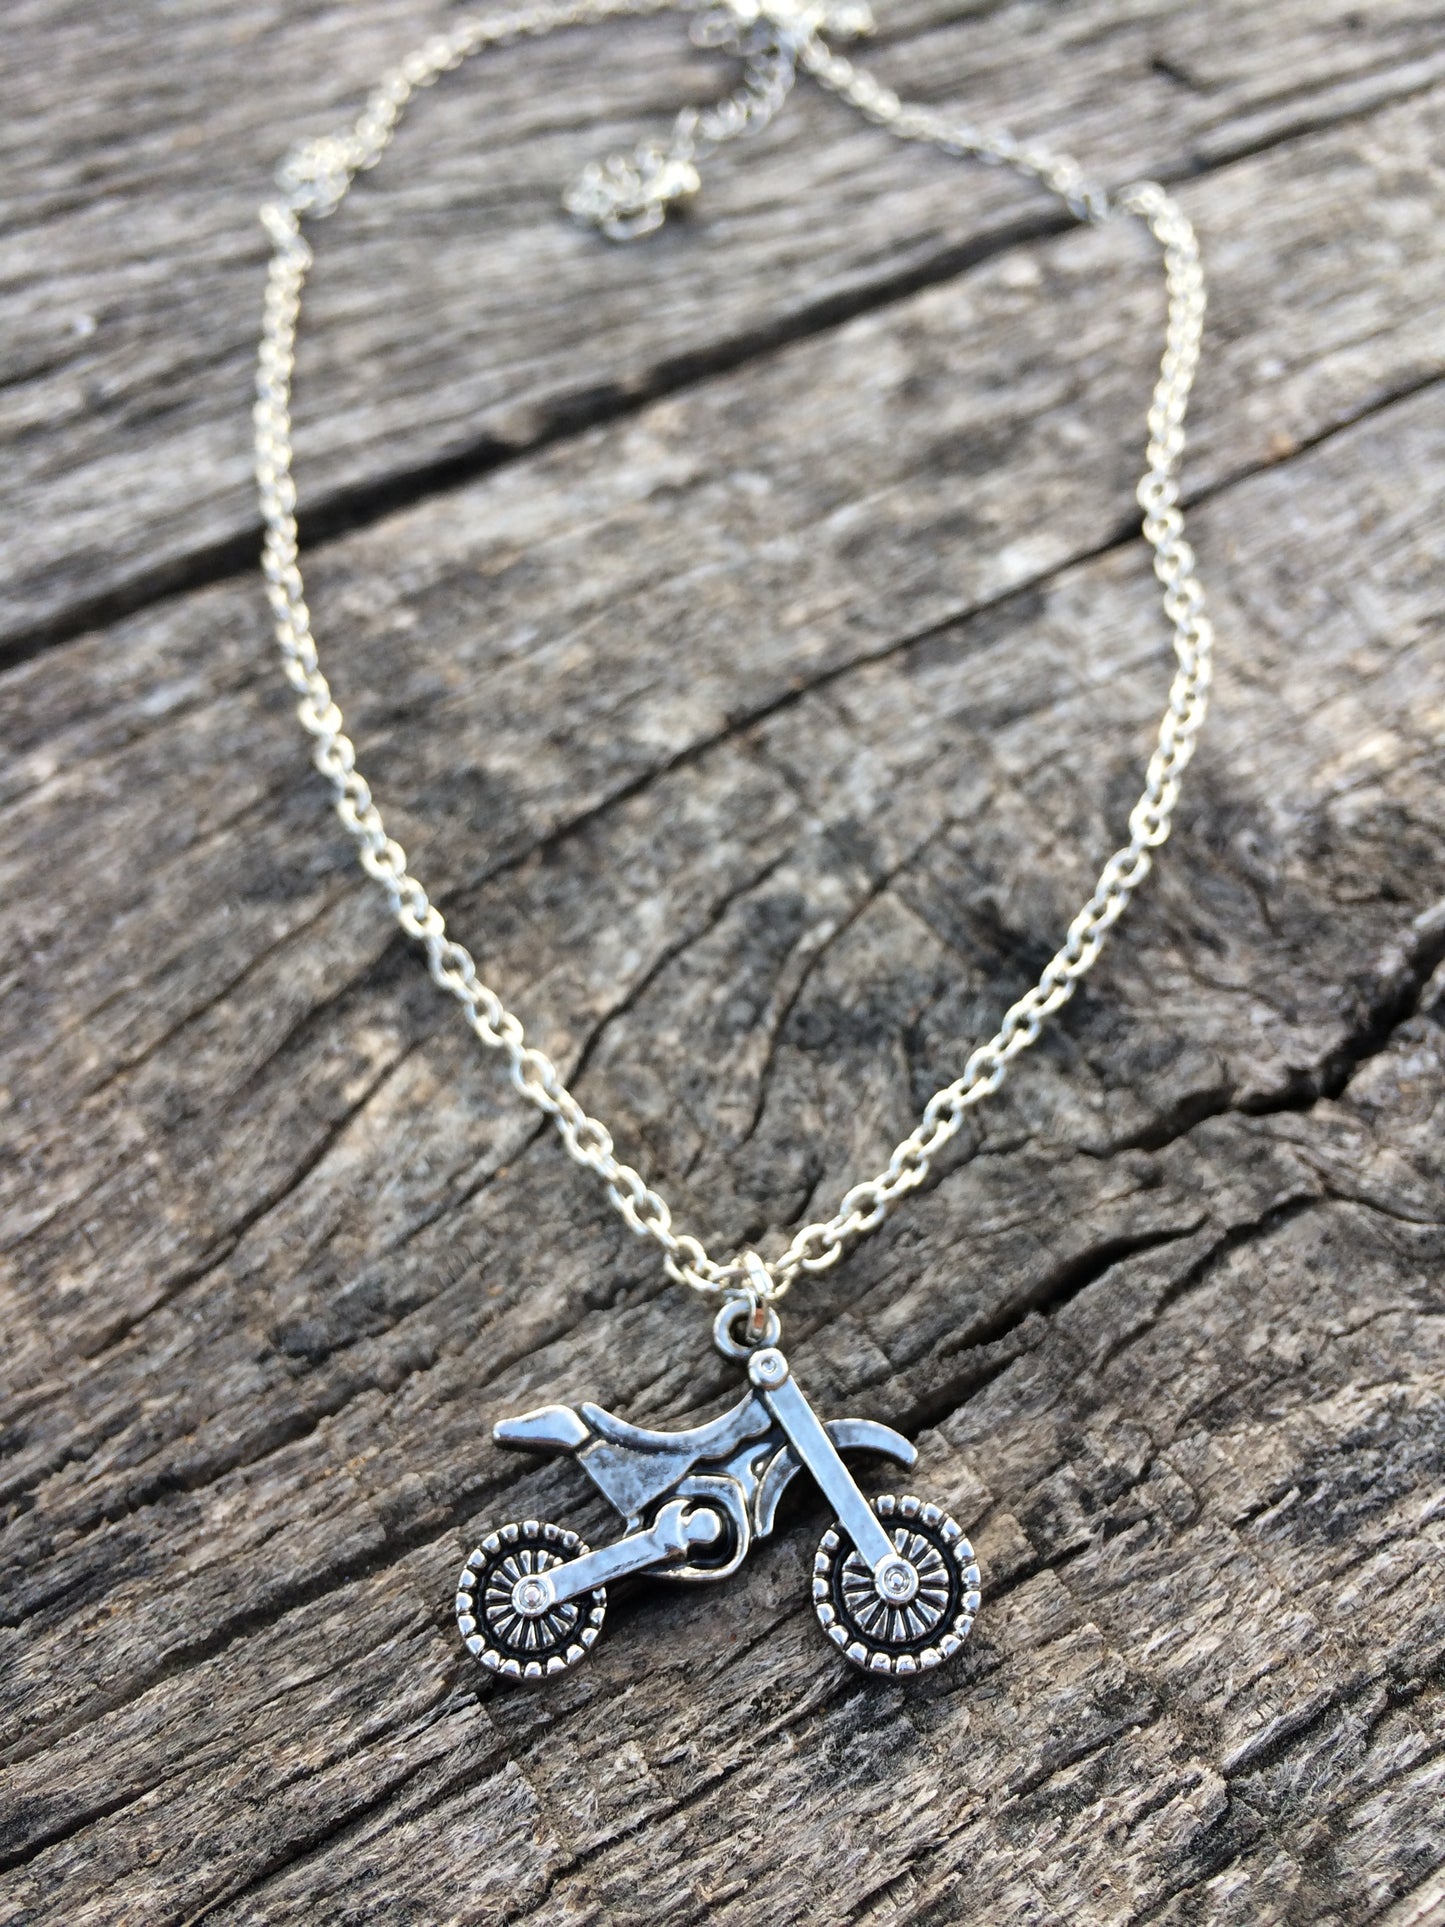 Chain Dirt Bike Necklace